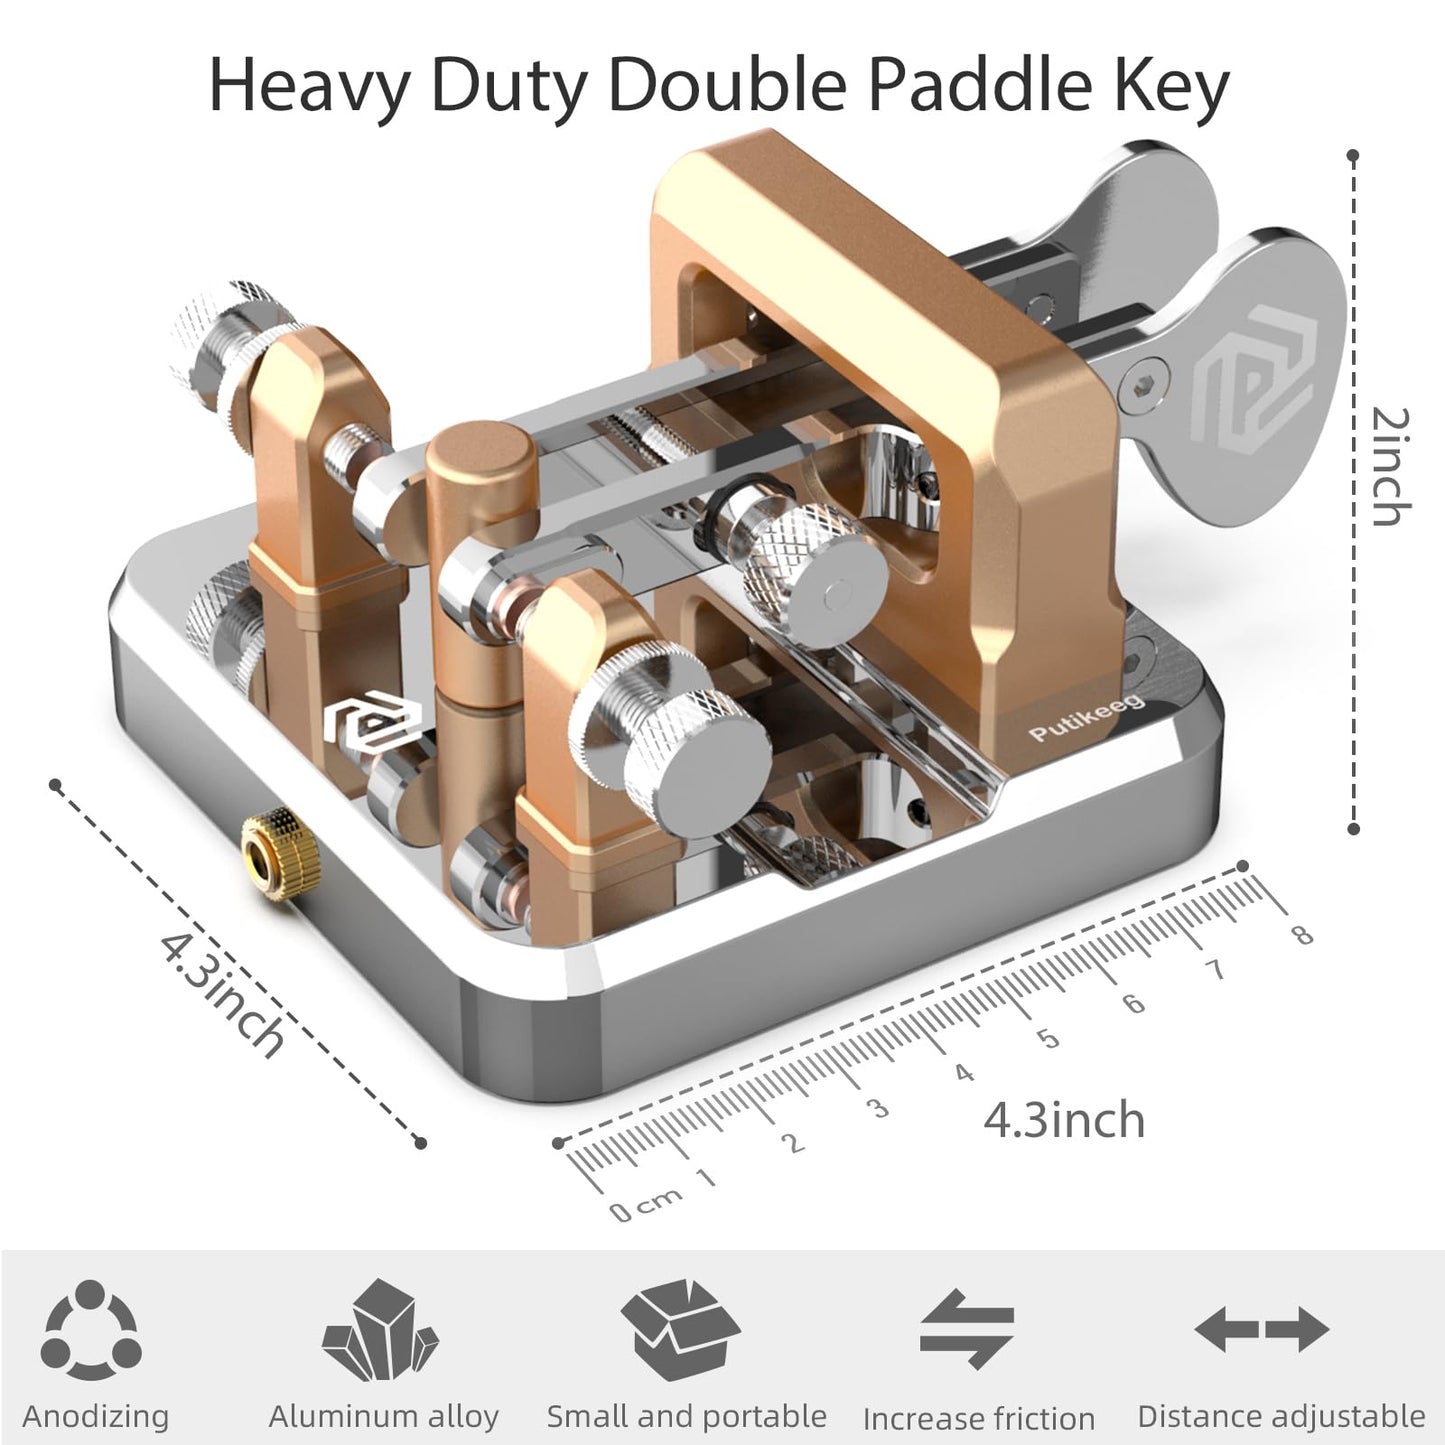 CW Key Automatic Double Paddle